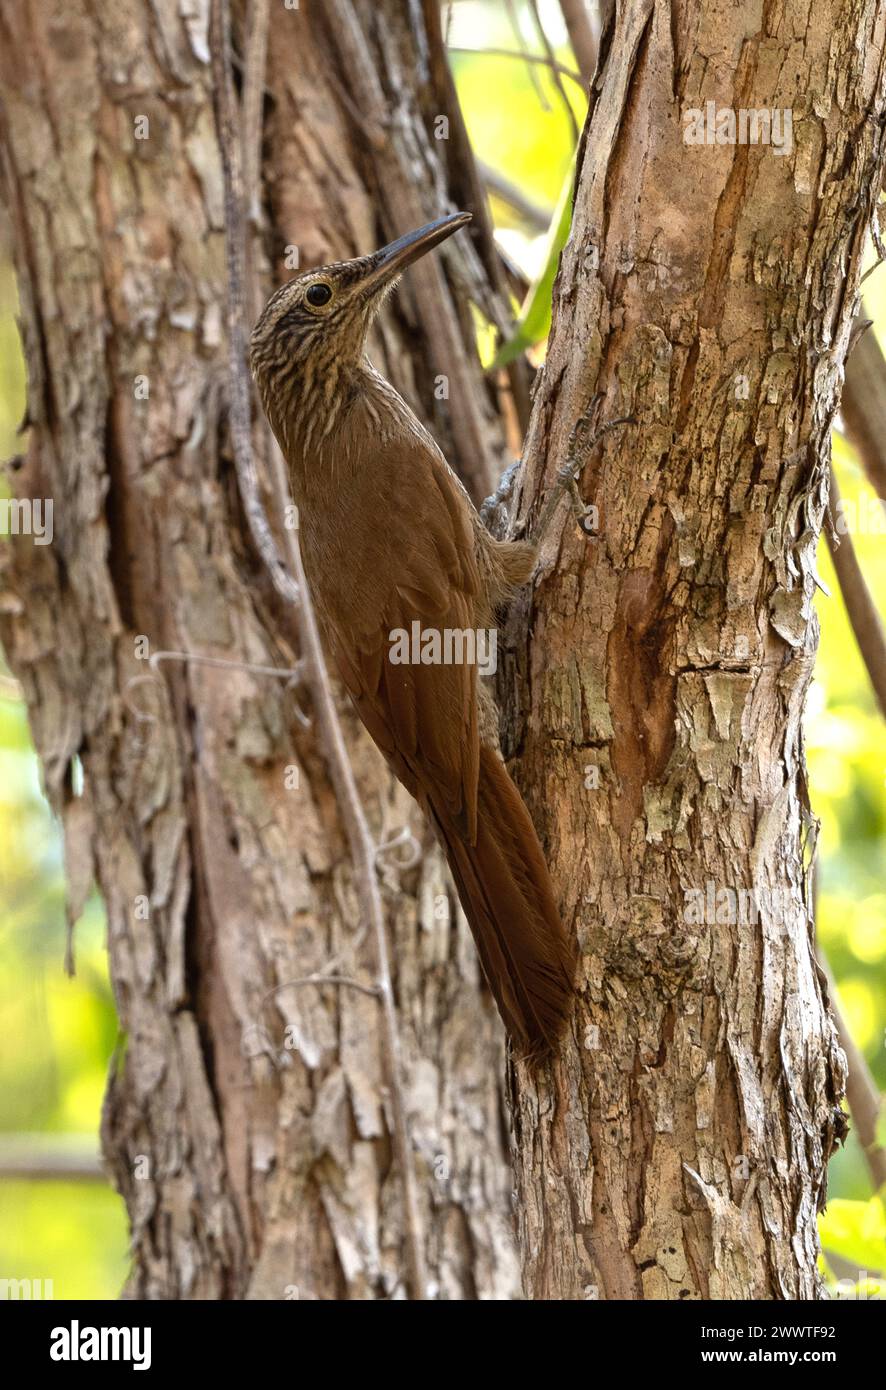 Planalto woodcreeper (Dendrocolaptes platyrostris intermedius, Dendrocolaptes intermedius), perched at a tree trunk, Brazil, Minas Gerais, Cavernas do Stock Photo